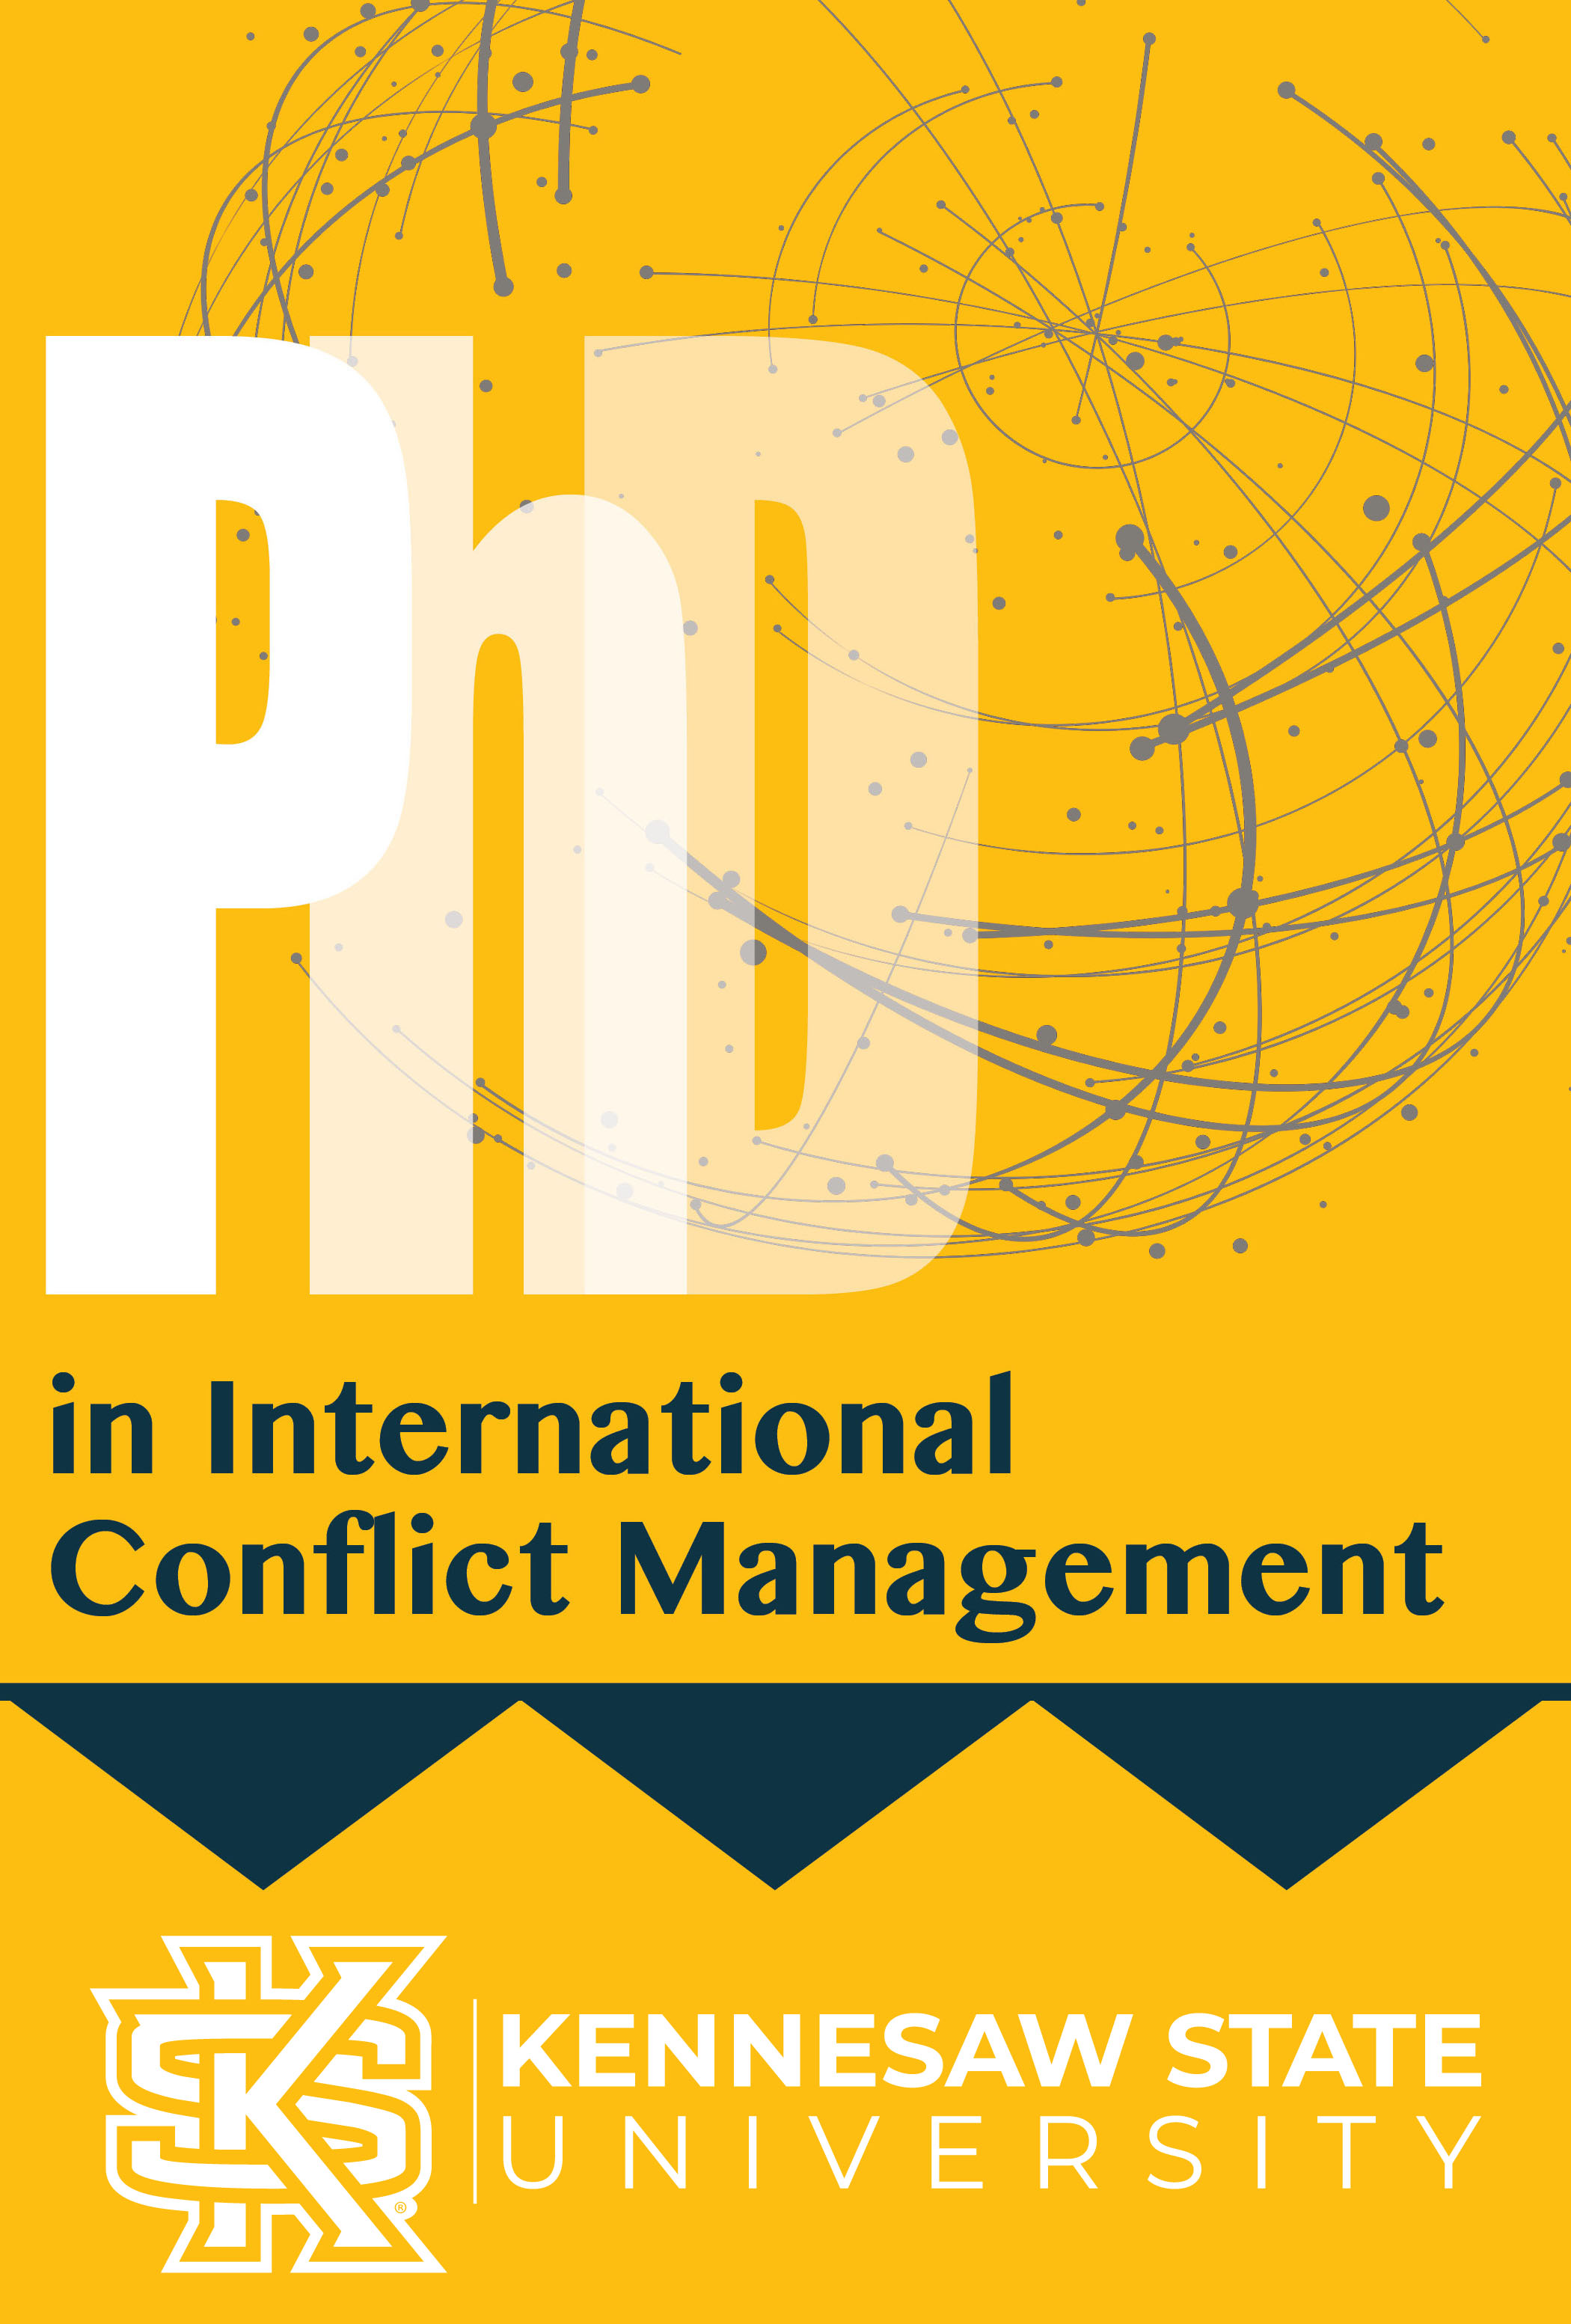 PhD in International Conflict Management at KSU